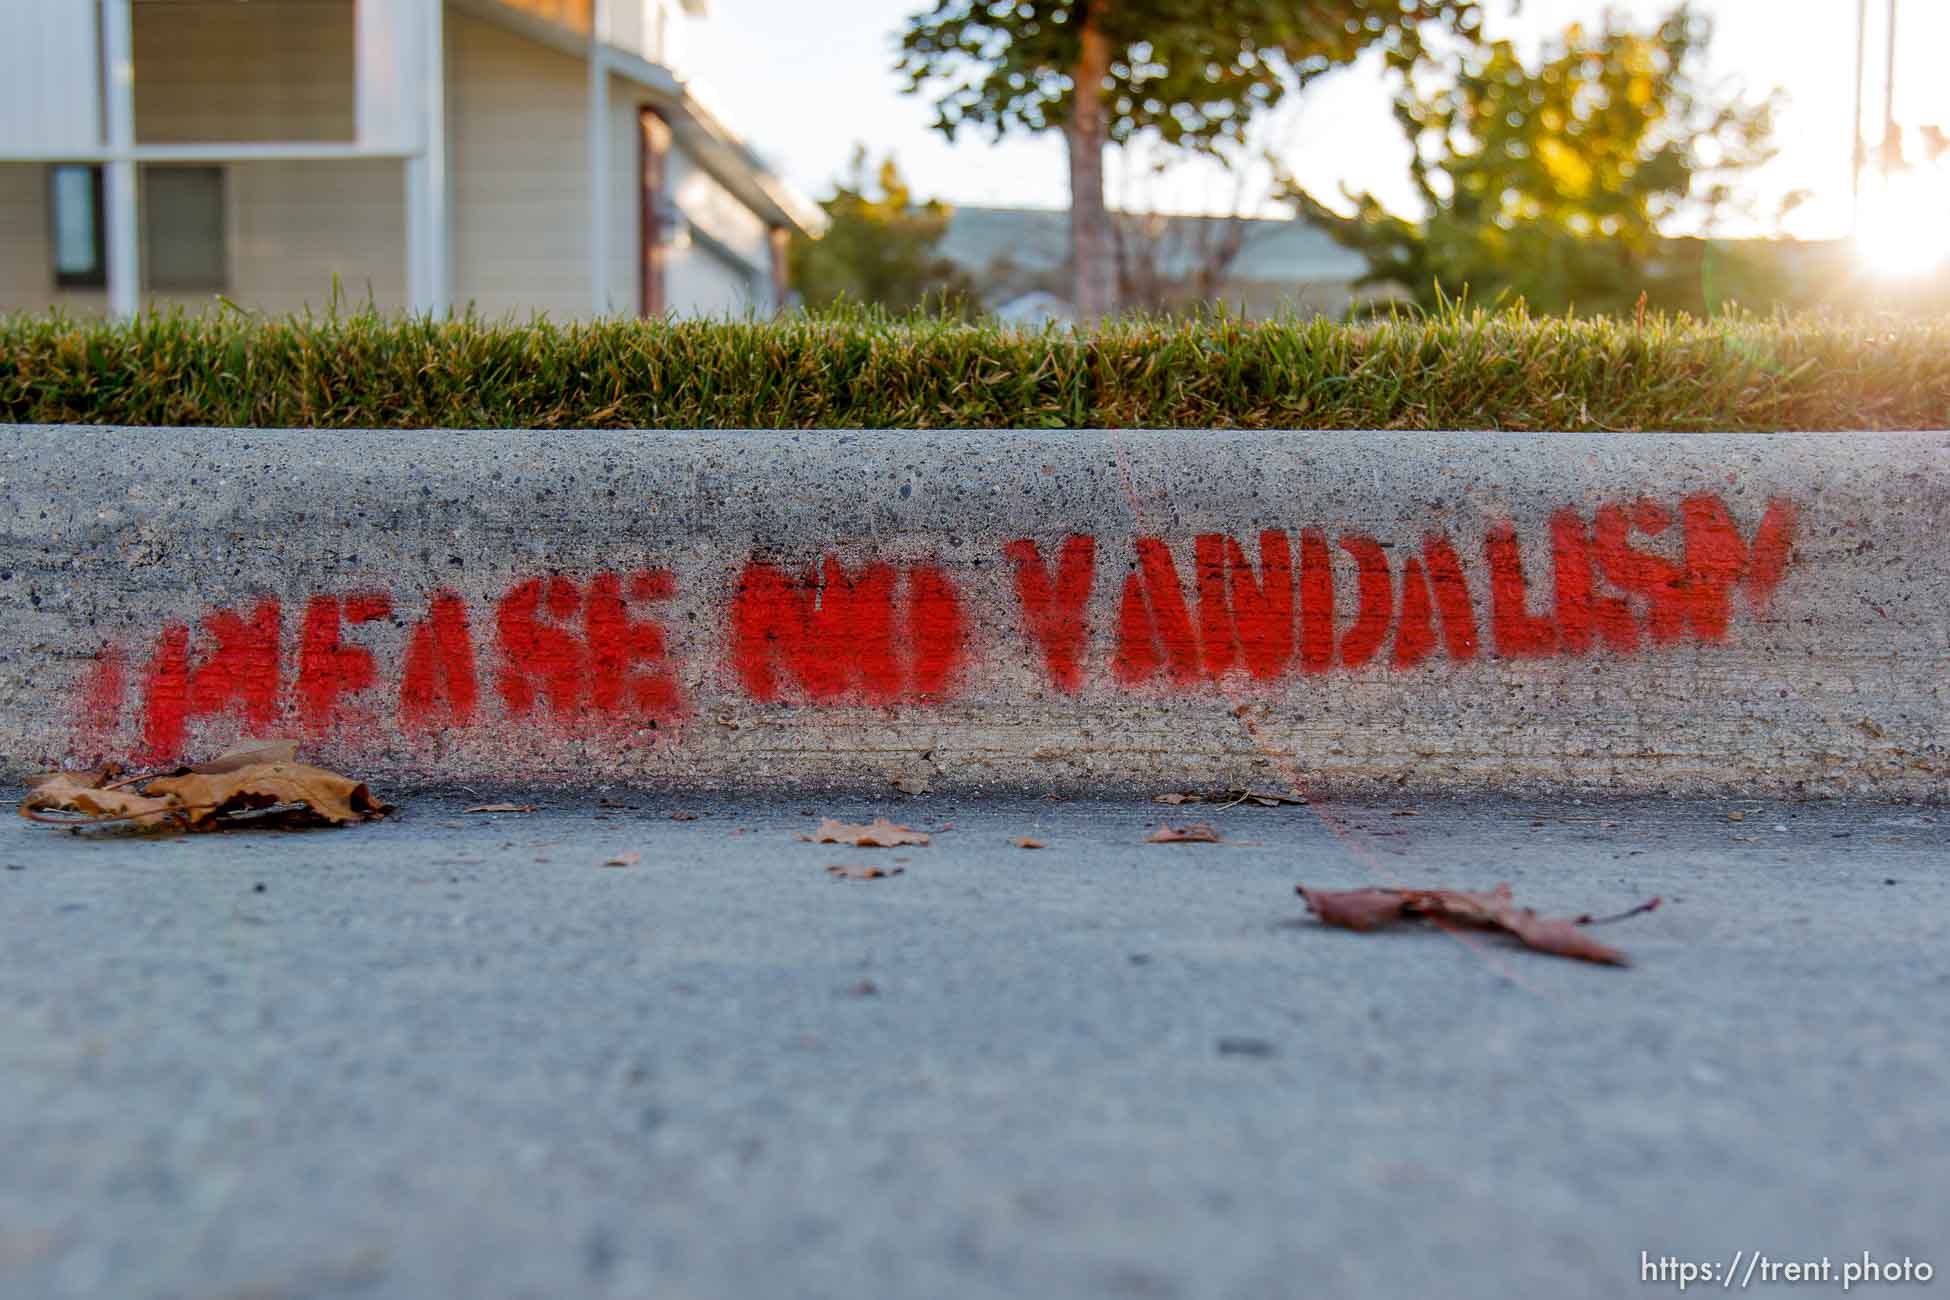 Please no Vandalism